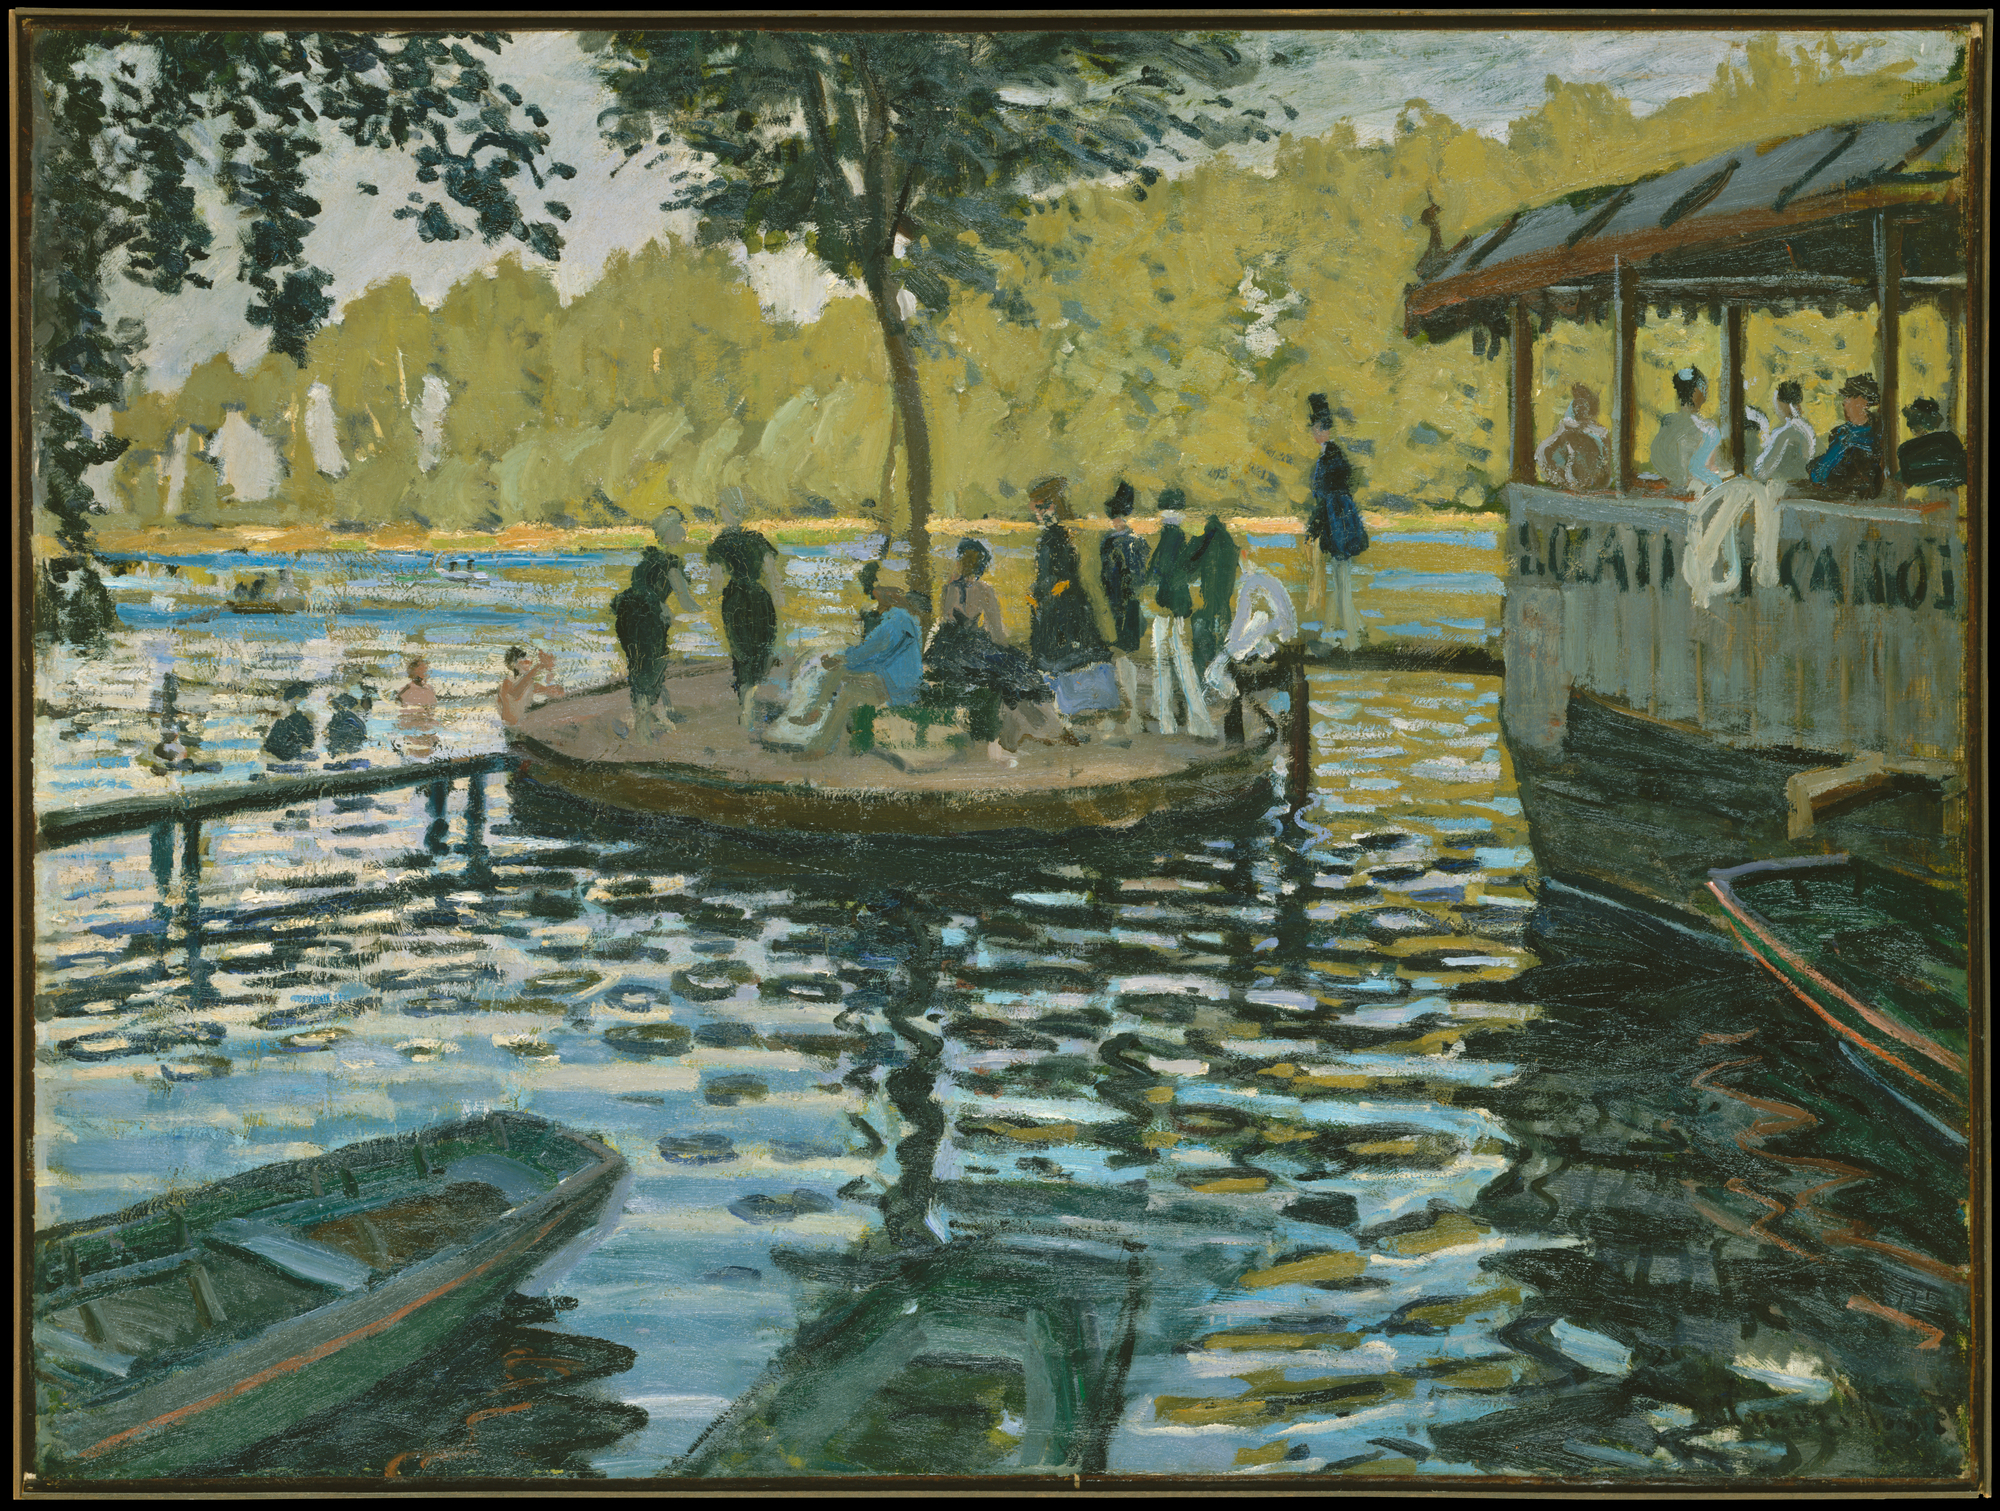 La Grenouillère by Claude Monet - 1869 - 74,6 × 99,7 cm Metropolitan Museum of Art